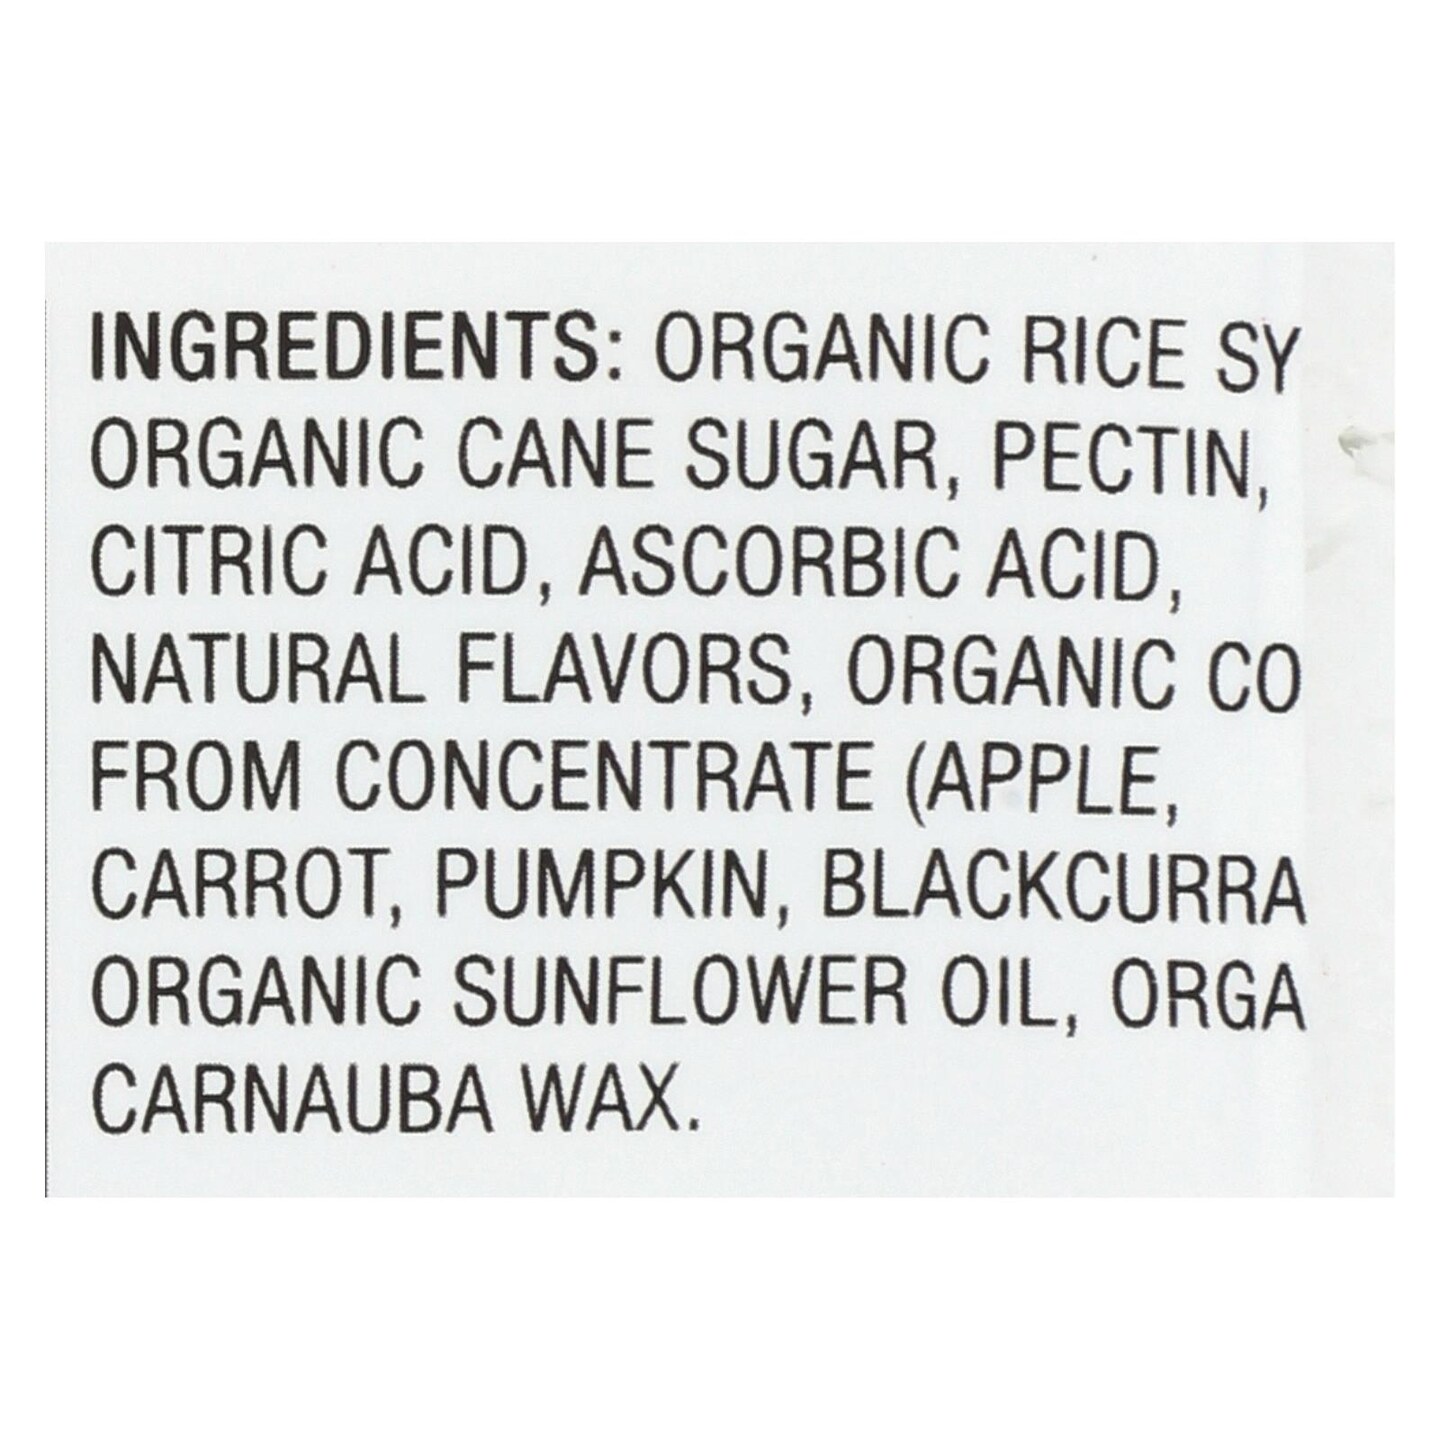 Yumearth Organics - Organic Fruit Snack - 4 Flavors - Case of 12 - 2 oz.